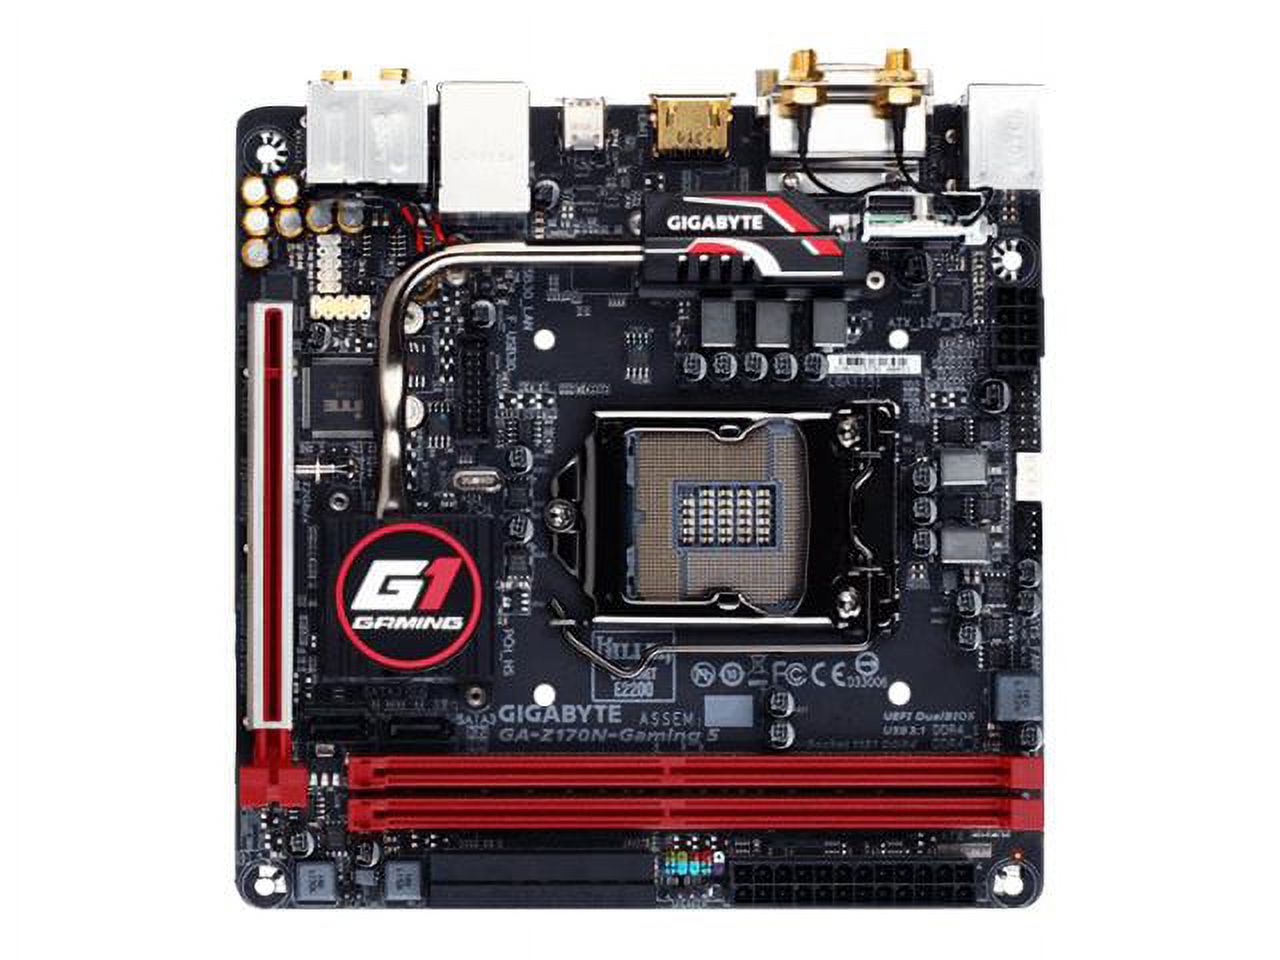 Gigabyte GA-Z170N-Gaming 5 - 1.0 - motherboard - mini ITX - LGA1151 Socket - Z170 Chipset - USB 3.0, USB 3.1, USB-C - Bluetooth, Gigabit LAN, Wi-Fi - onboard graphics (CPU required) - HD Audio (8-channel) - image 1 of 3